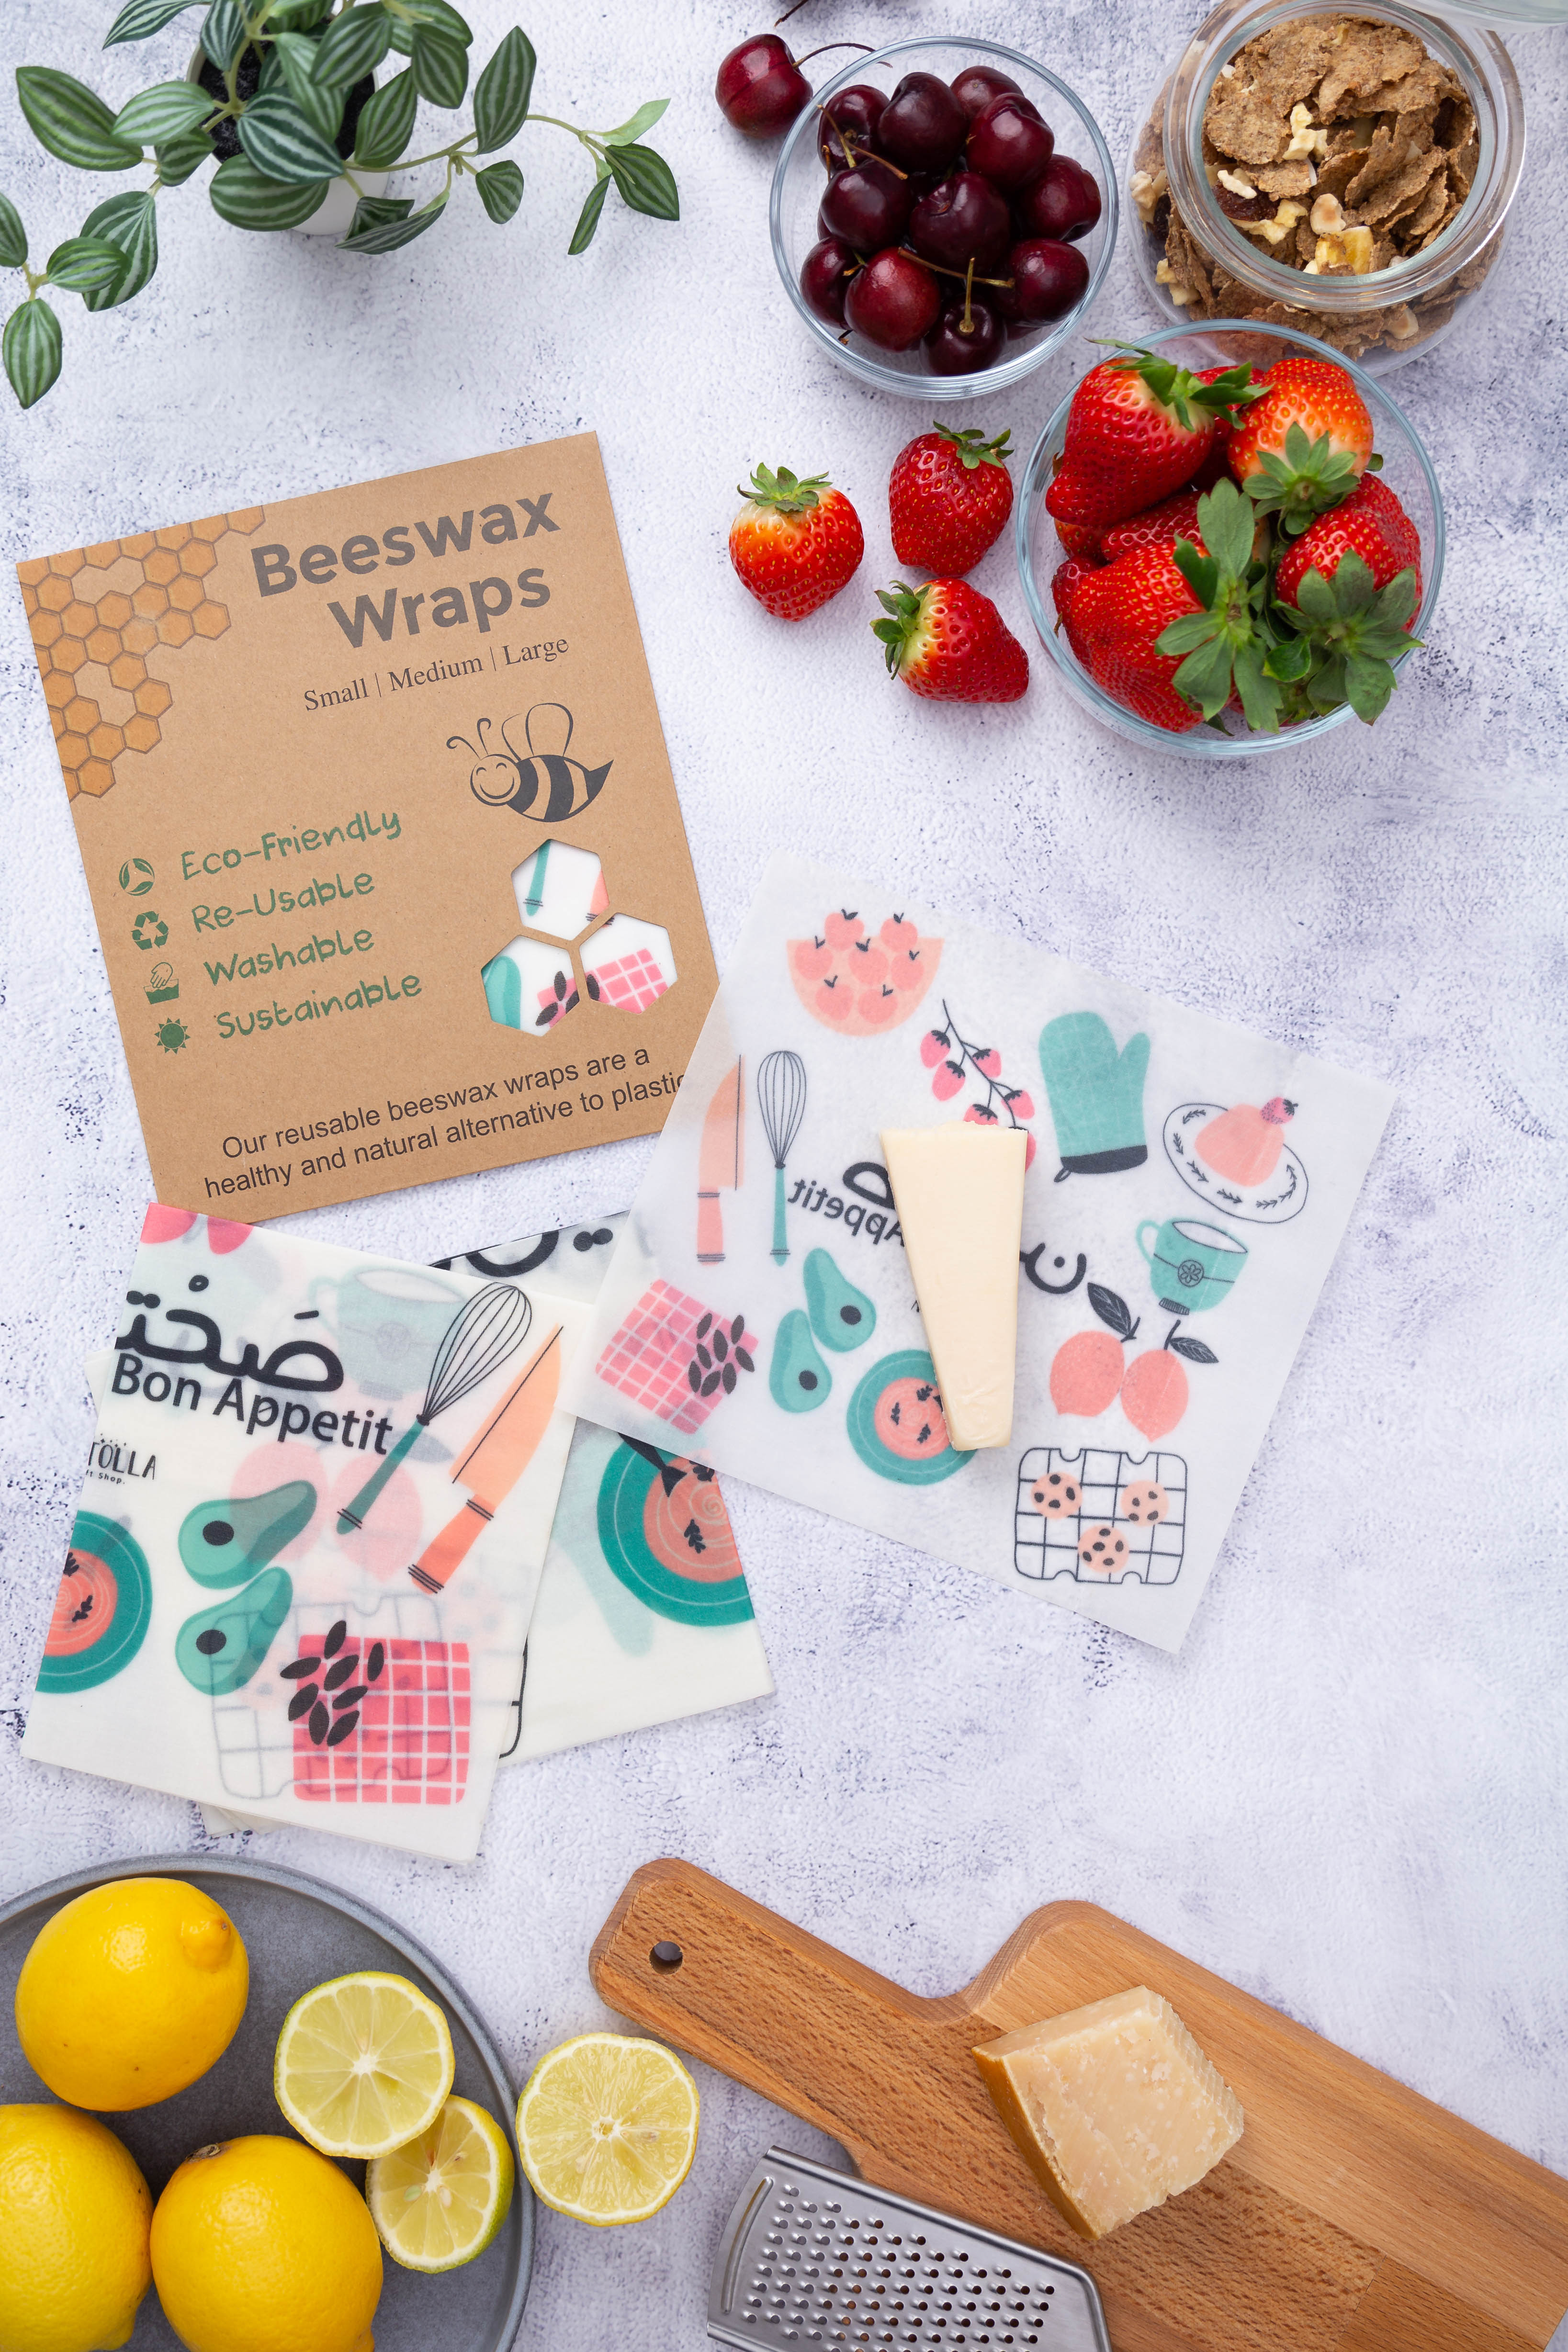 Beeswax Food Wraps